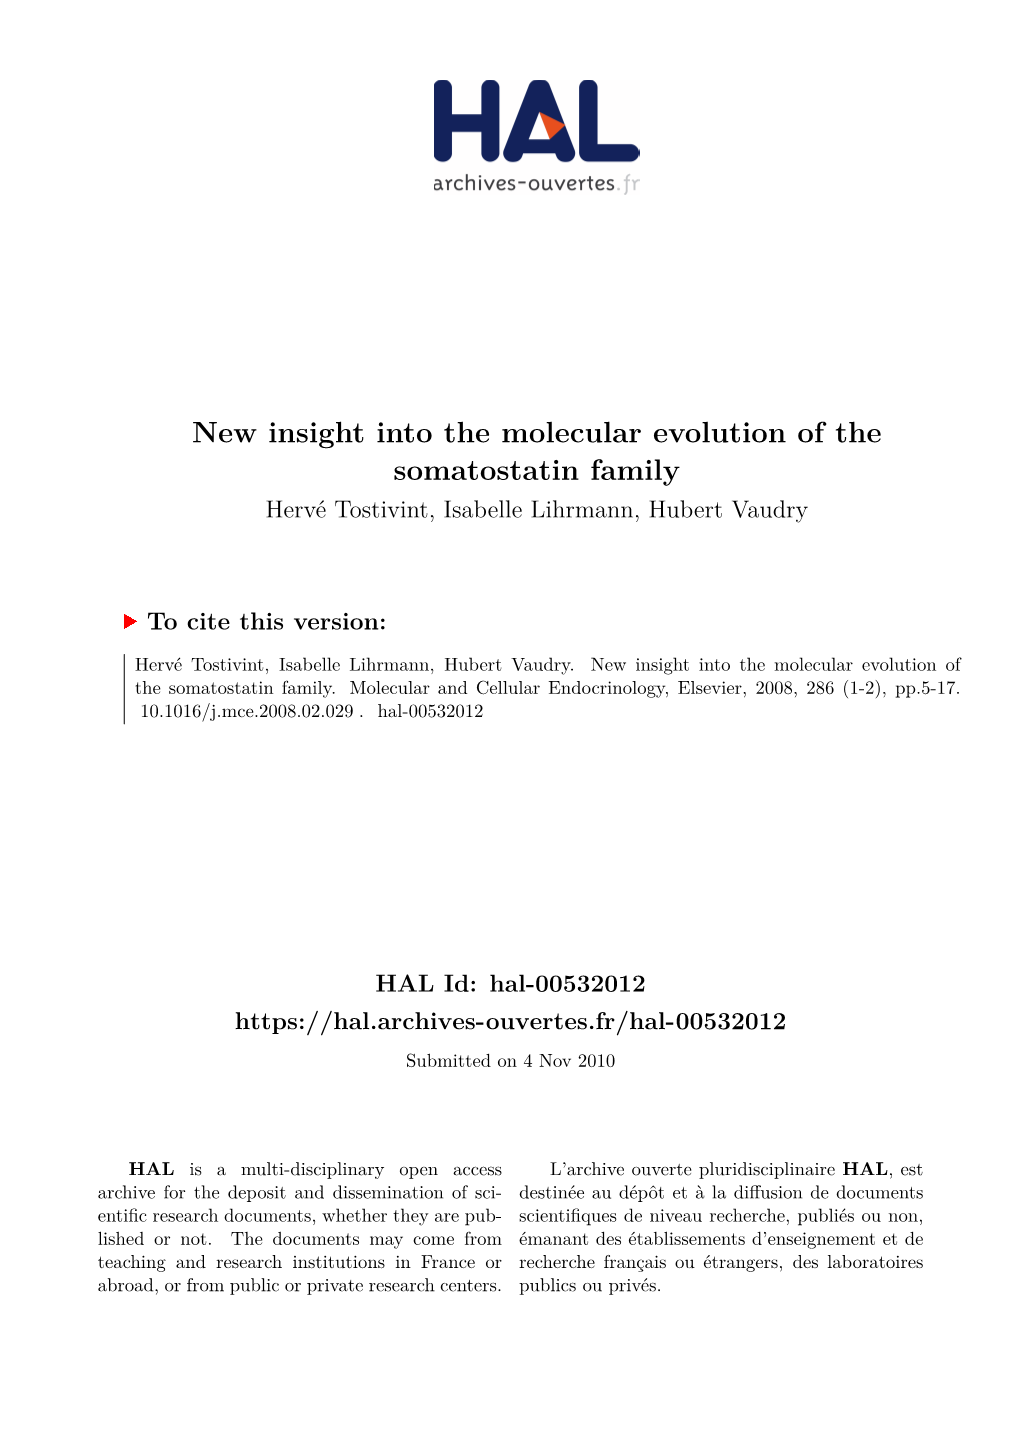 New Insight Into the Molecular Evolution of the Somatostatin Family Hervé Tostivint, Isabelle Lihrmann, Hubert Vaudry